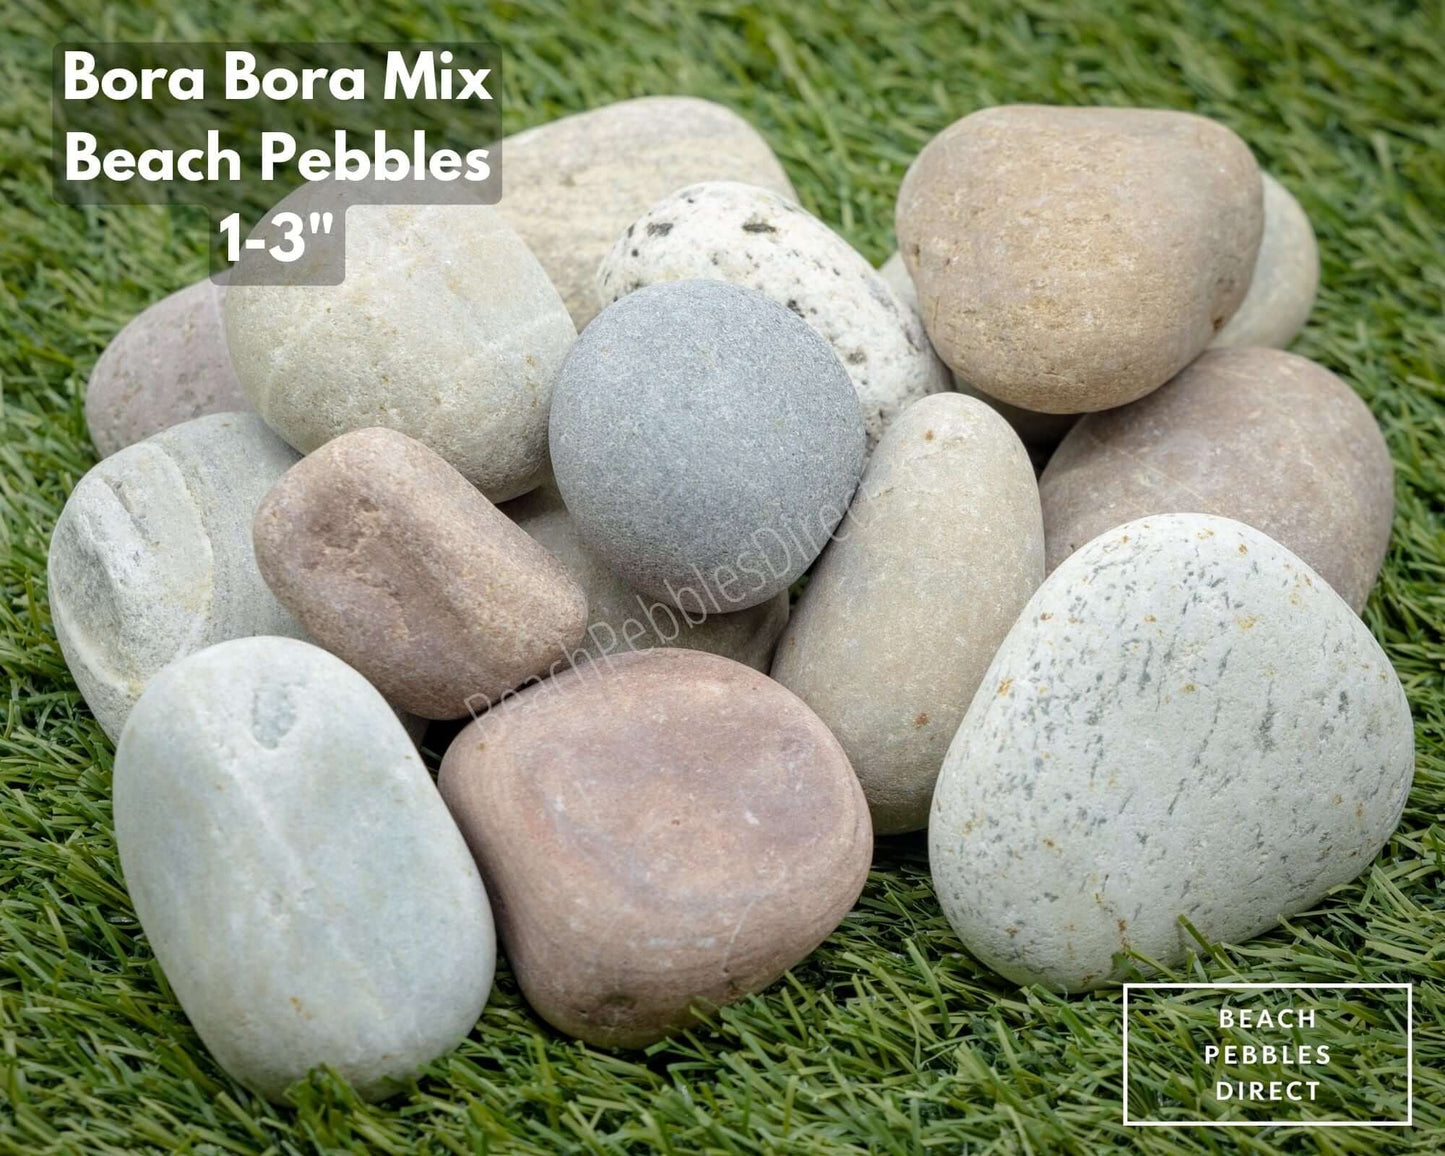 Bora Bora Mix Beach Pebbles